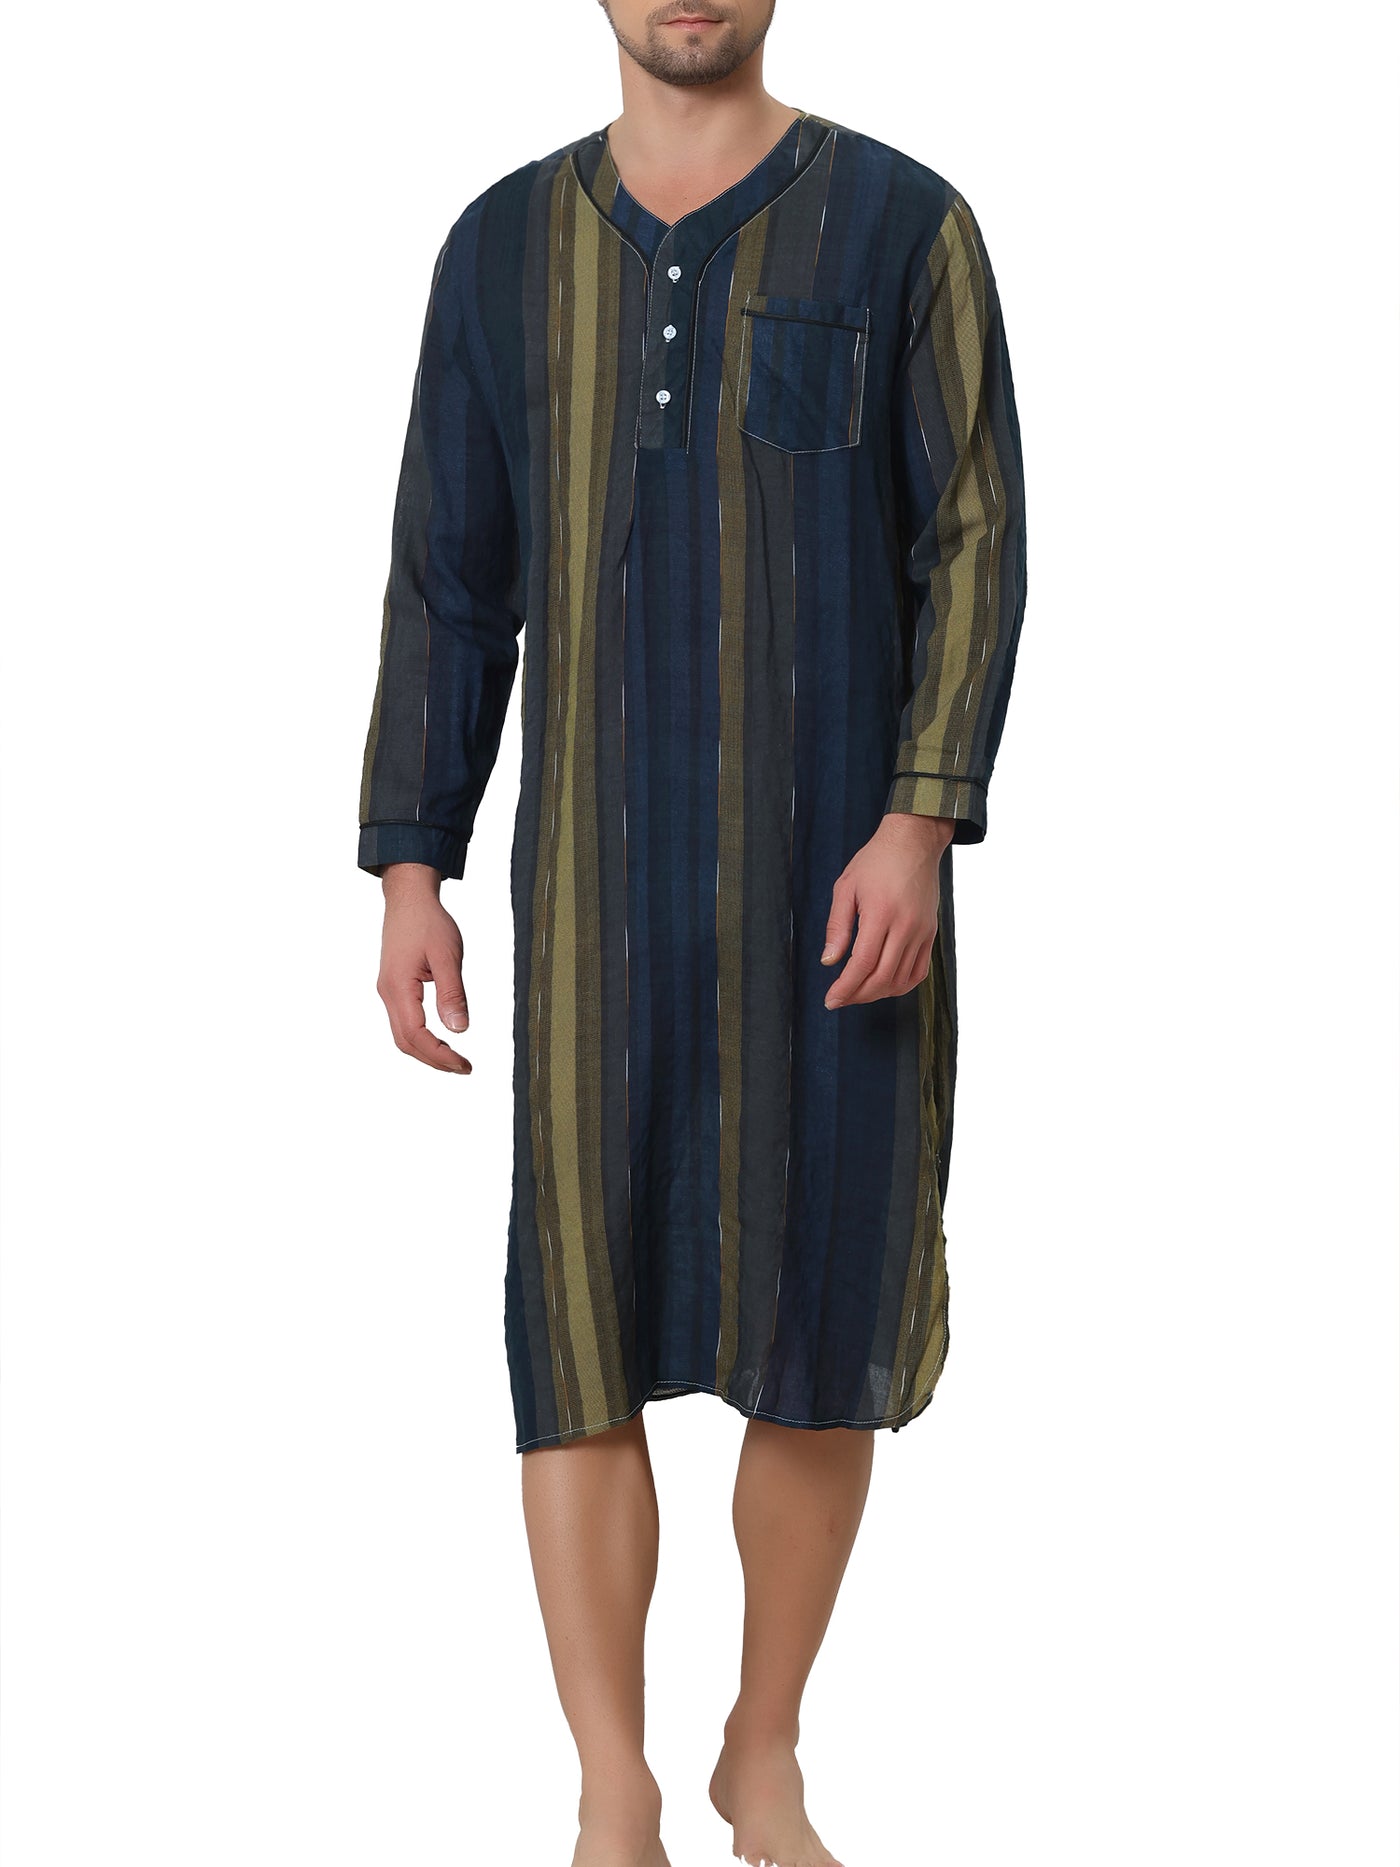 Bublédon Striped Print Nightgown for Men's V-Neck Button Long Sleeves Nightshirt Sleep Shirt